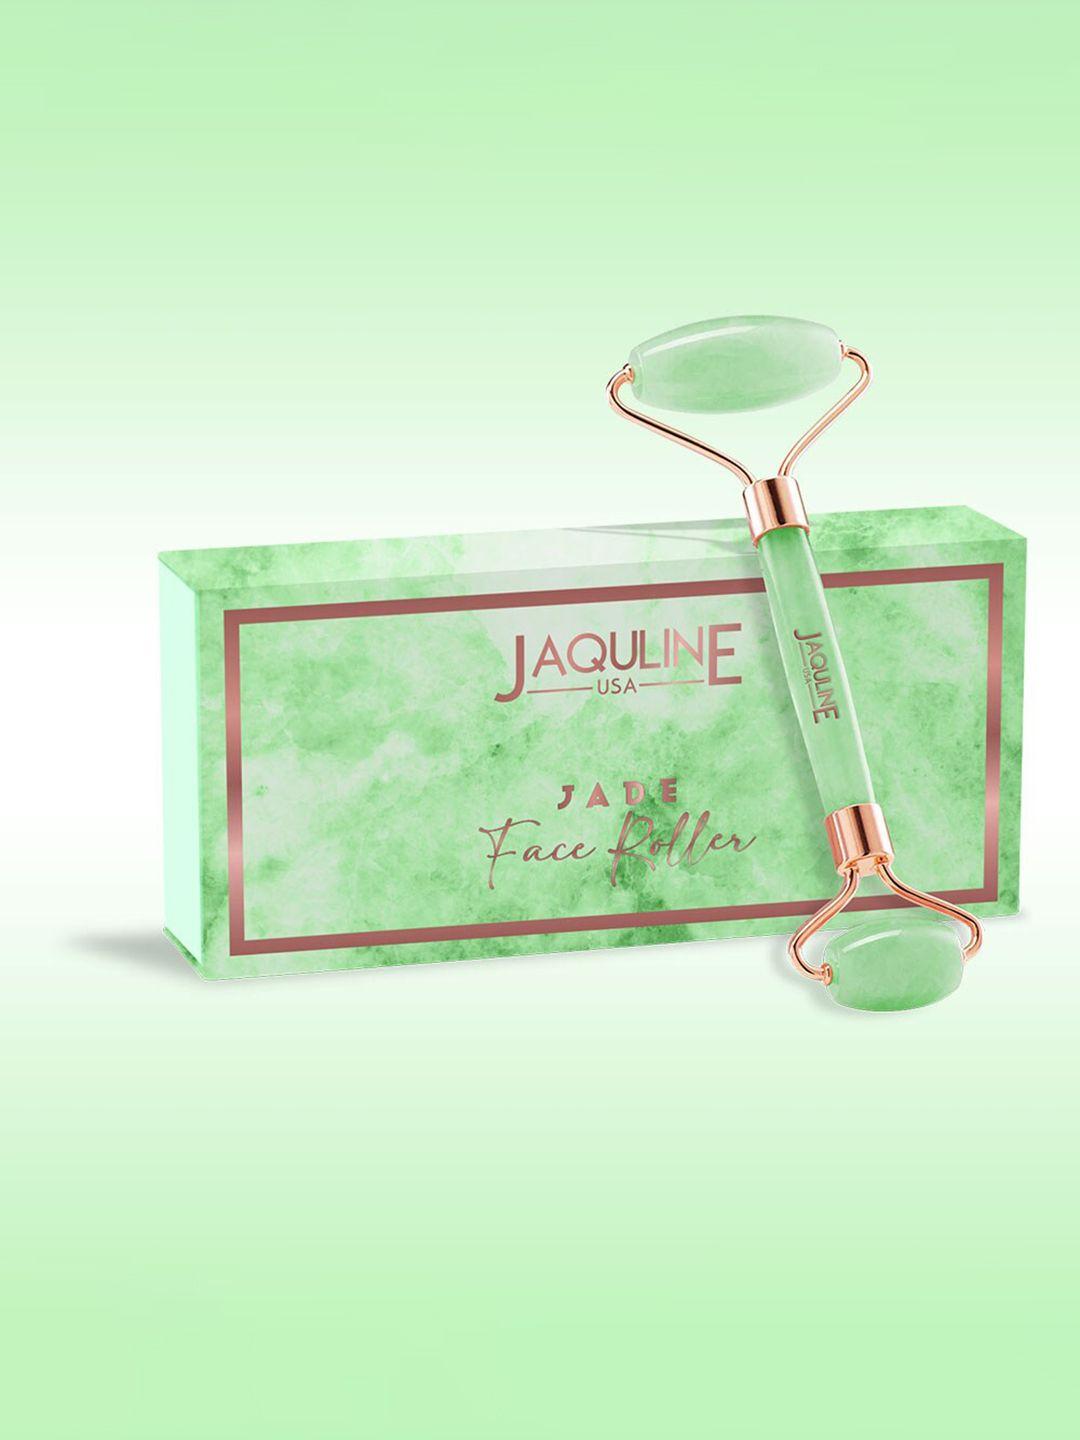 jaquline-usa-northern-jade-face-roller